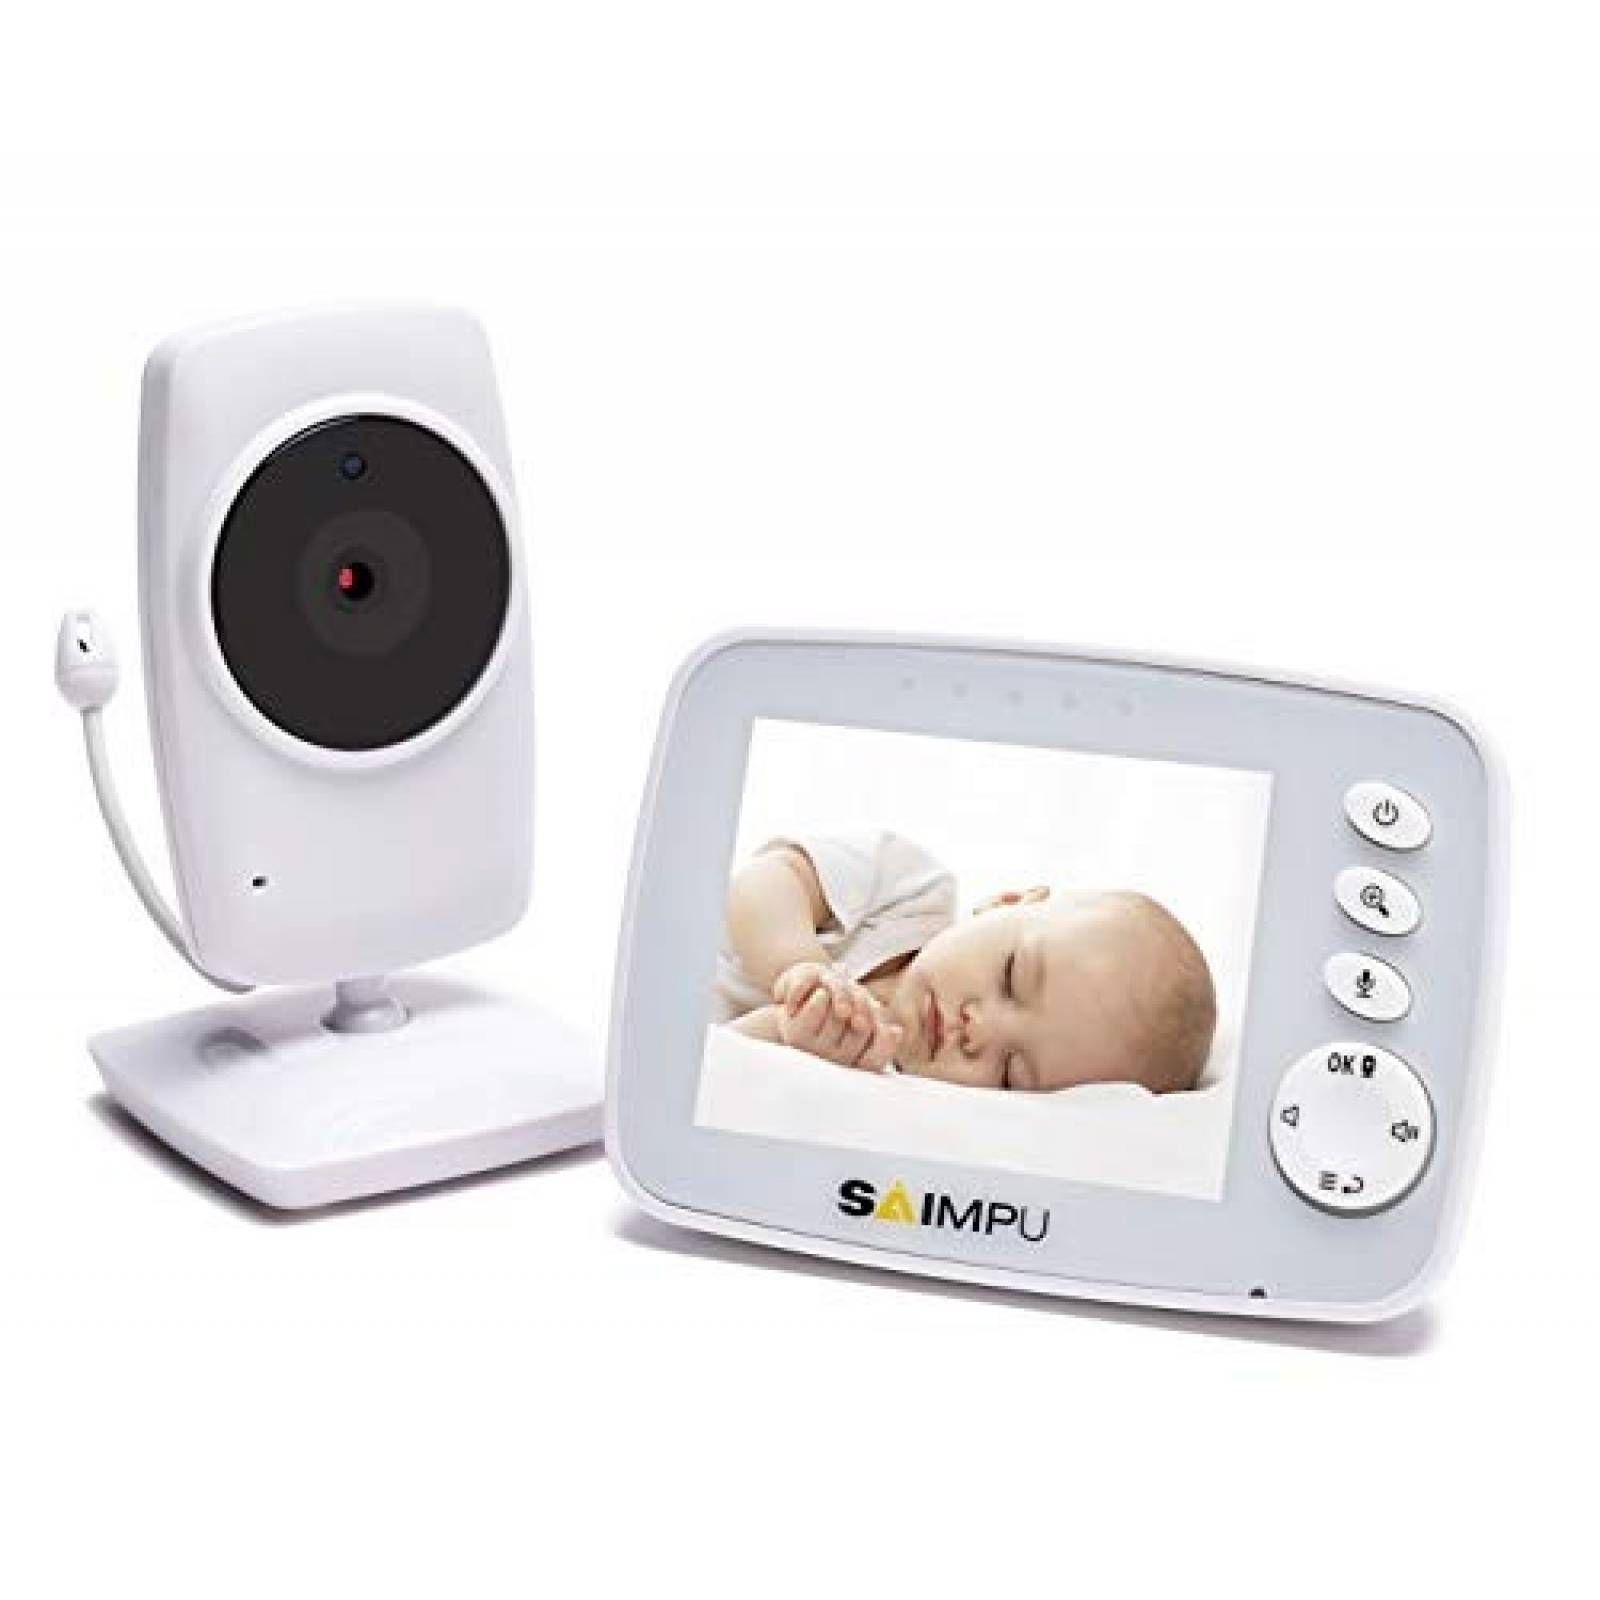 Monitor de vídeo para bebé SAIMPU con visión nocturna